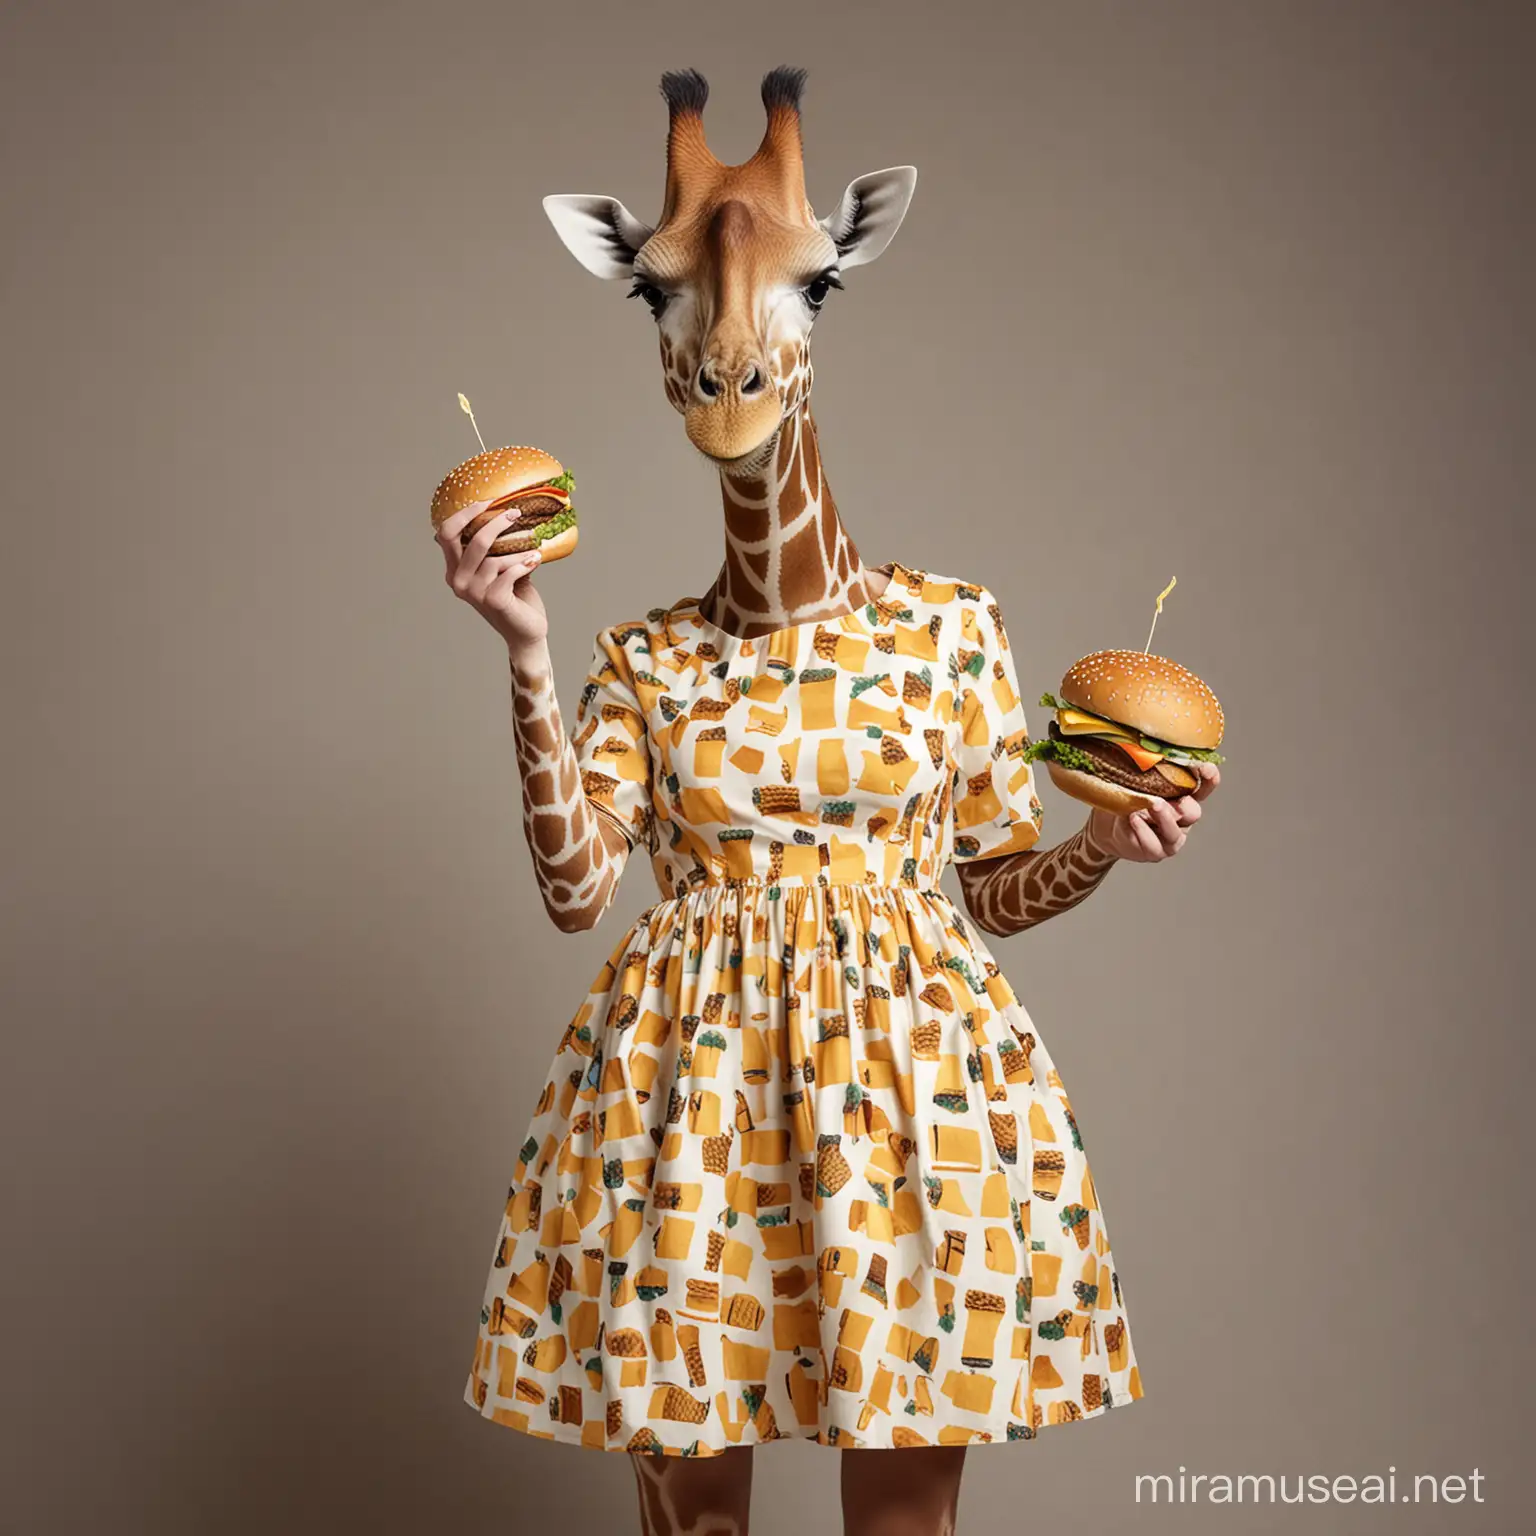 Giraffe Eating Burger in Stylish Dress